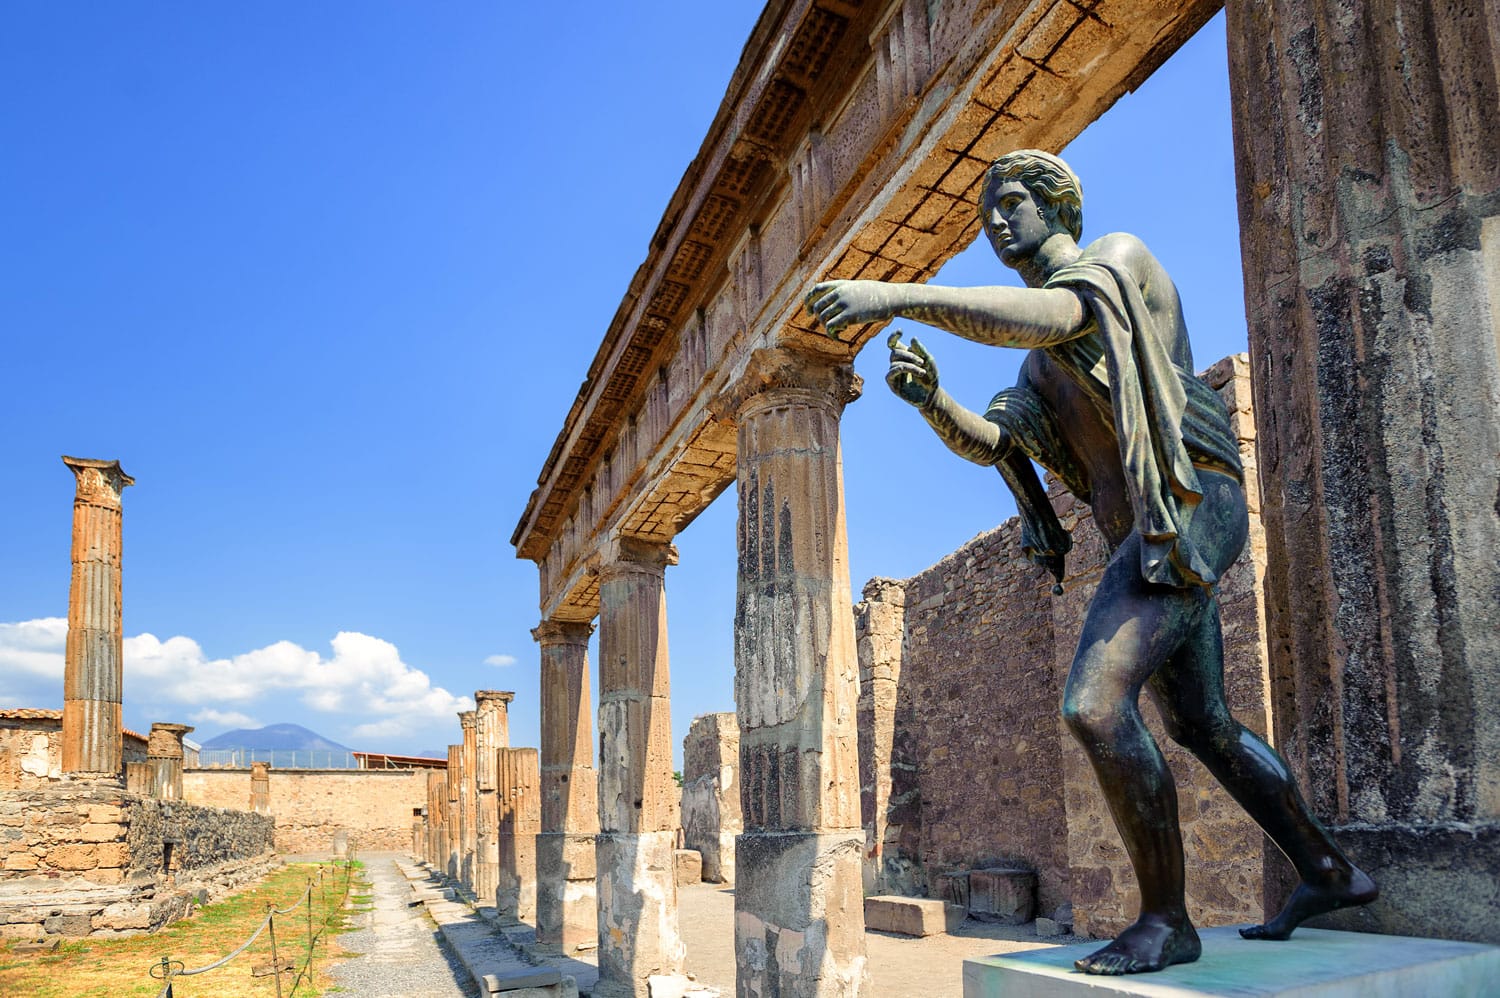 Ruins of the antique Temple of Apollo with bronze Apollo statue in Pompeii, Naples, Italy